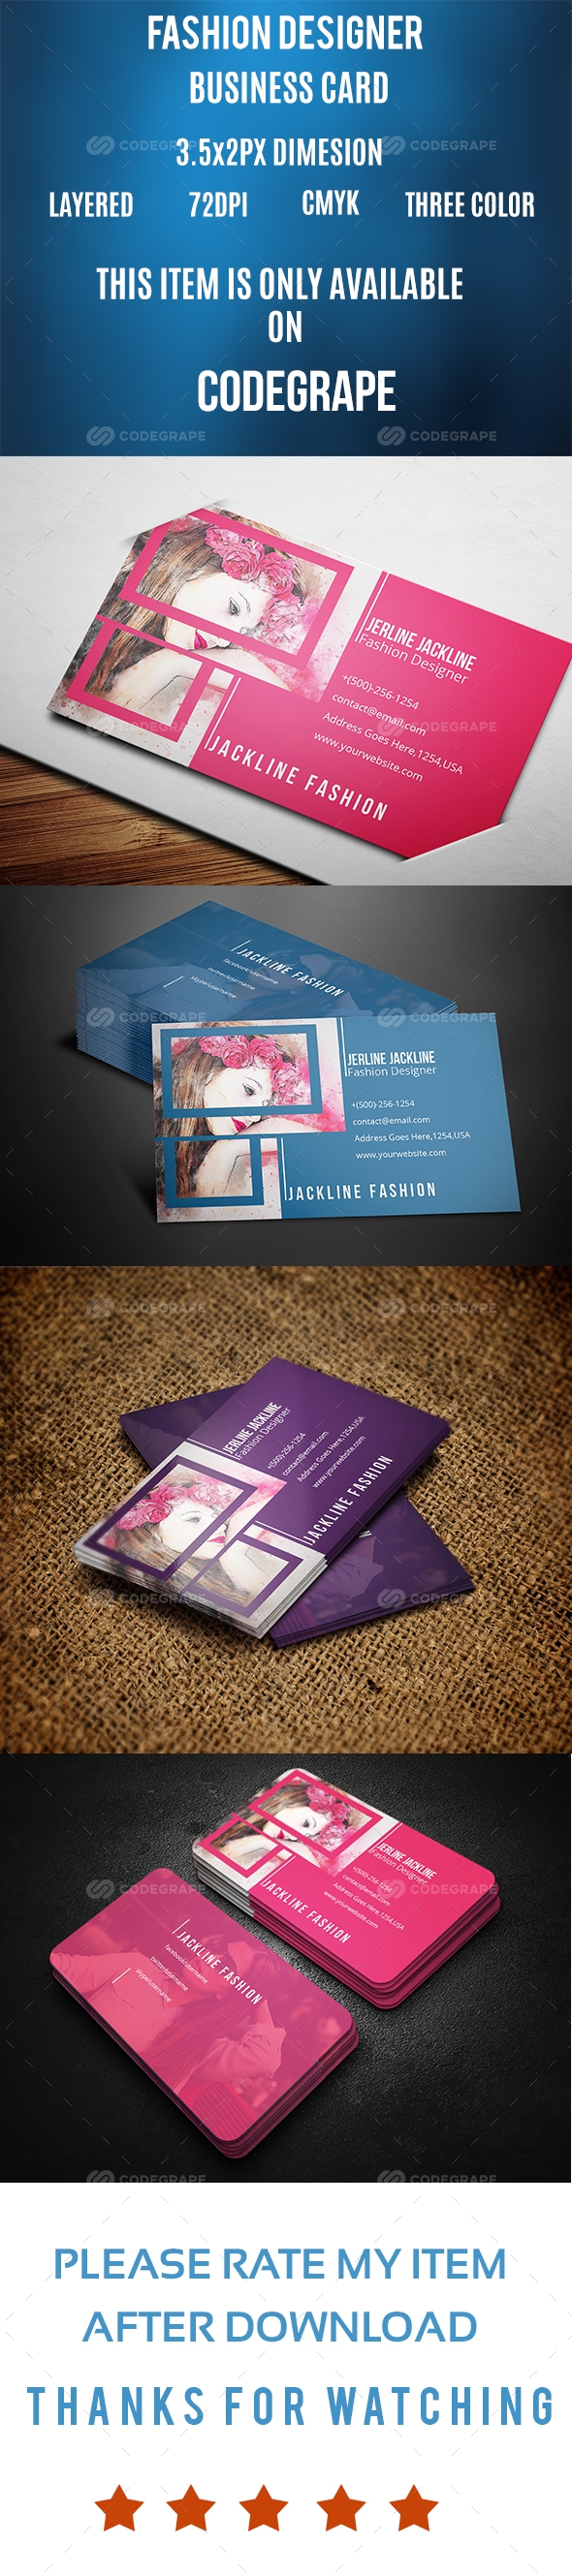 Fashion Designer Business Card